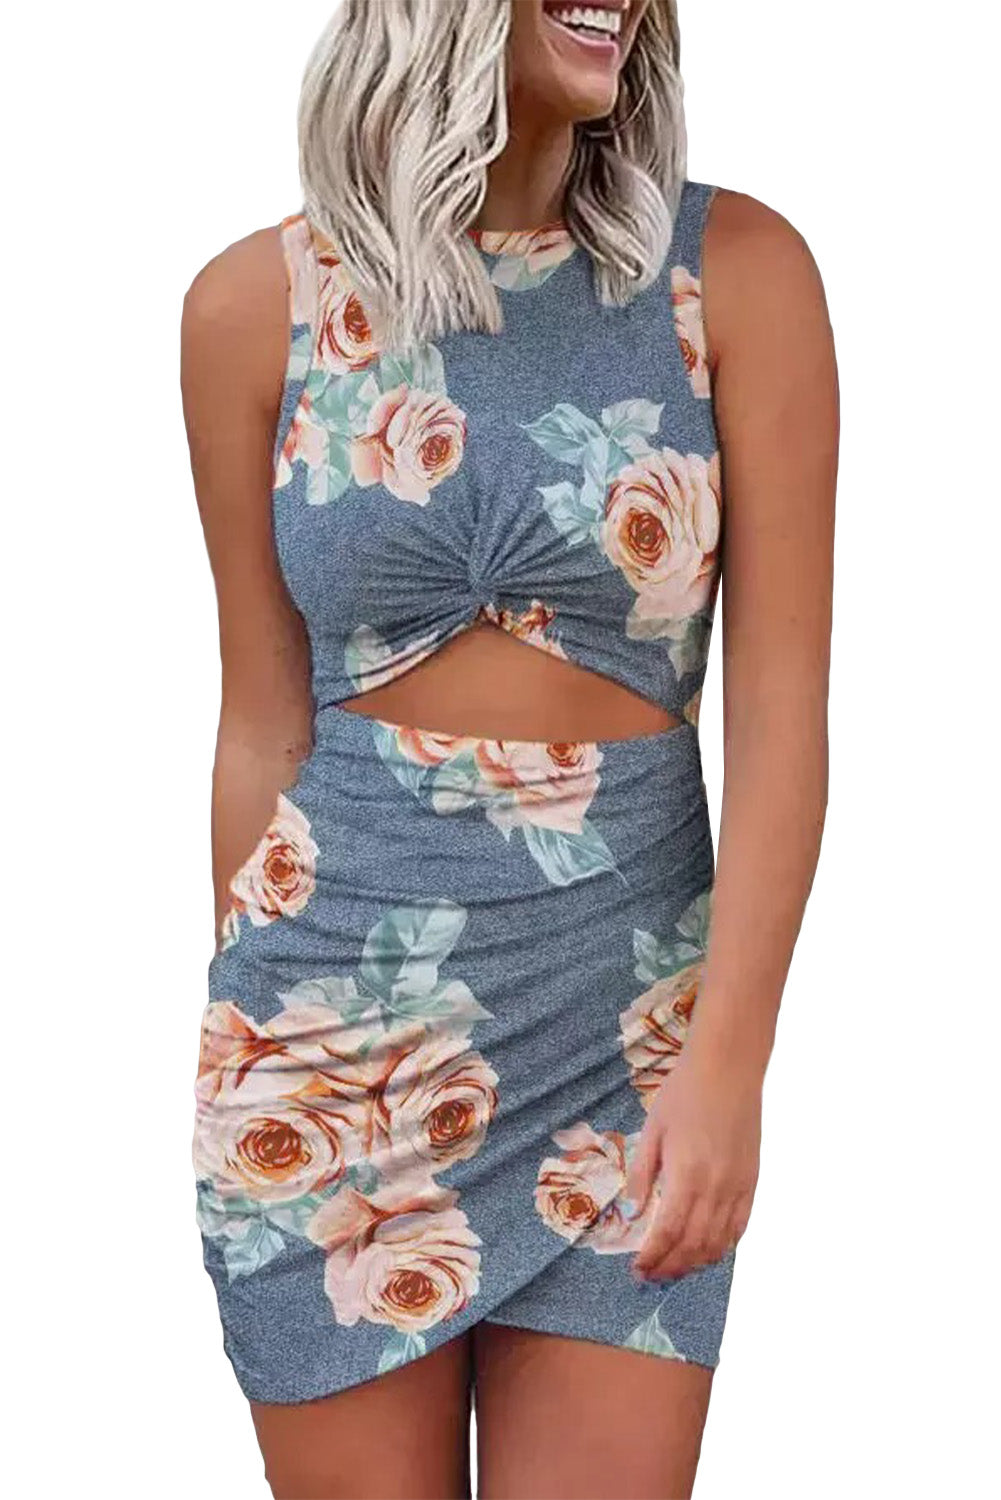 Women Summer Sleeveless Bodycon Tank Dress Tie Dye Cut Out Club Party Mini Dress